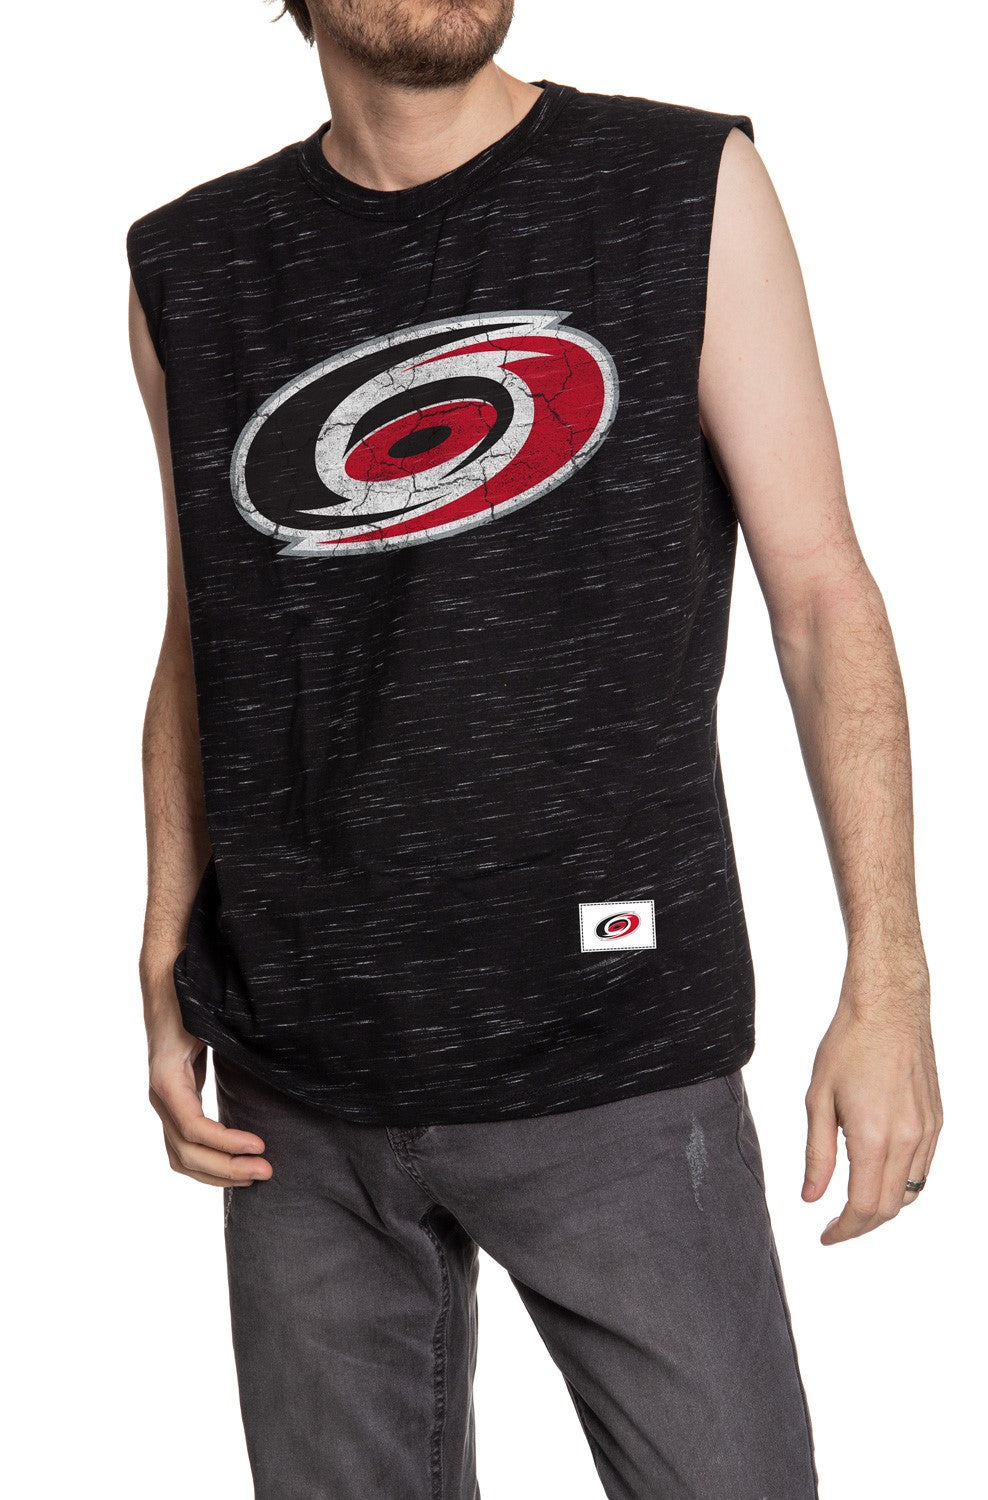 Carolina Hurricanes Logo Sleeveless Shirt for Men – Crew Neck Space Dyed